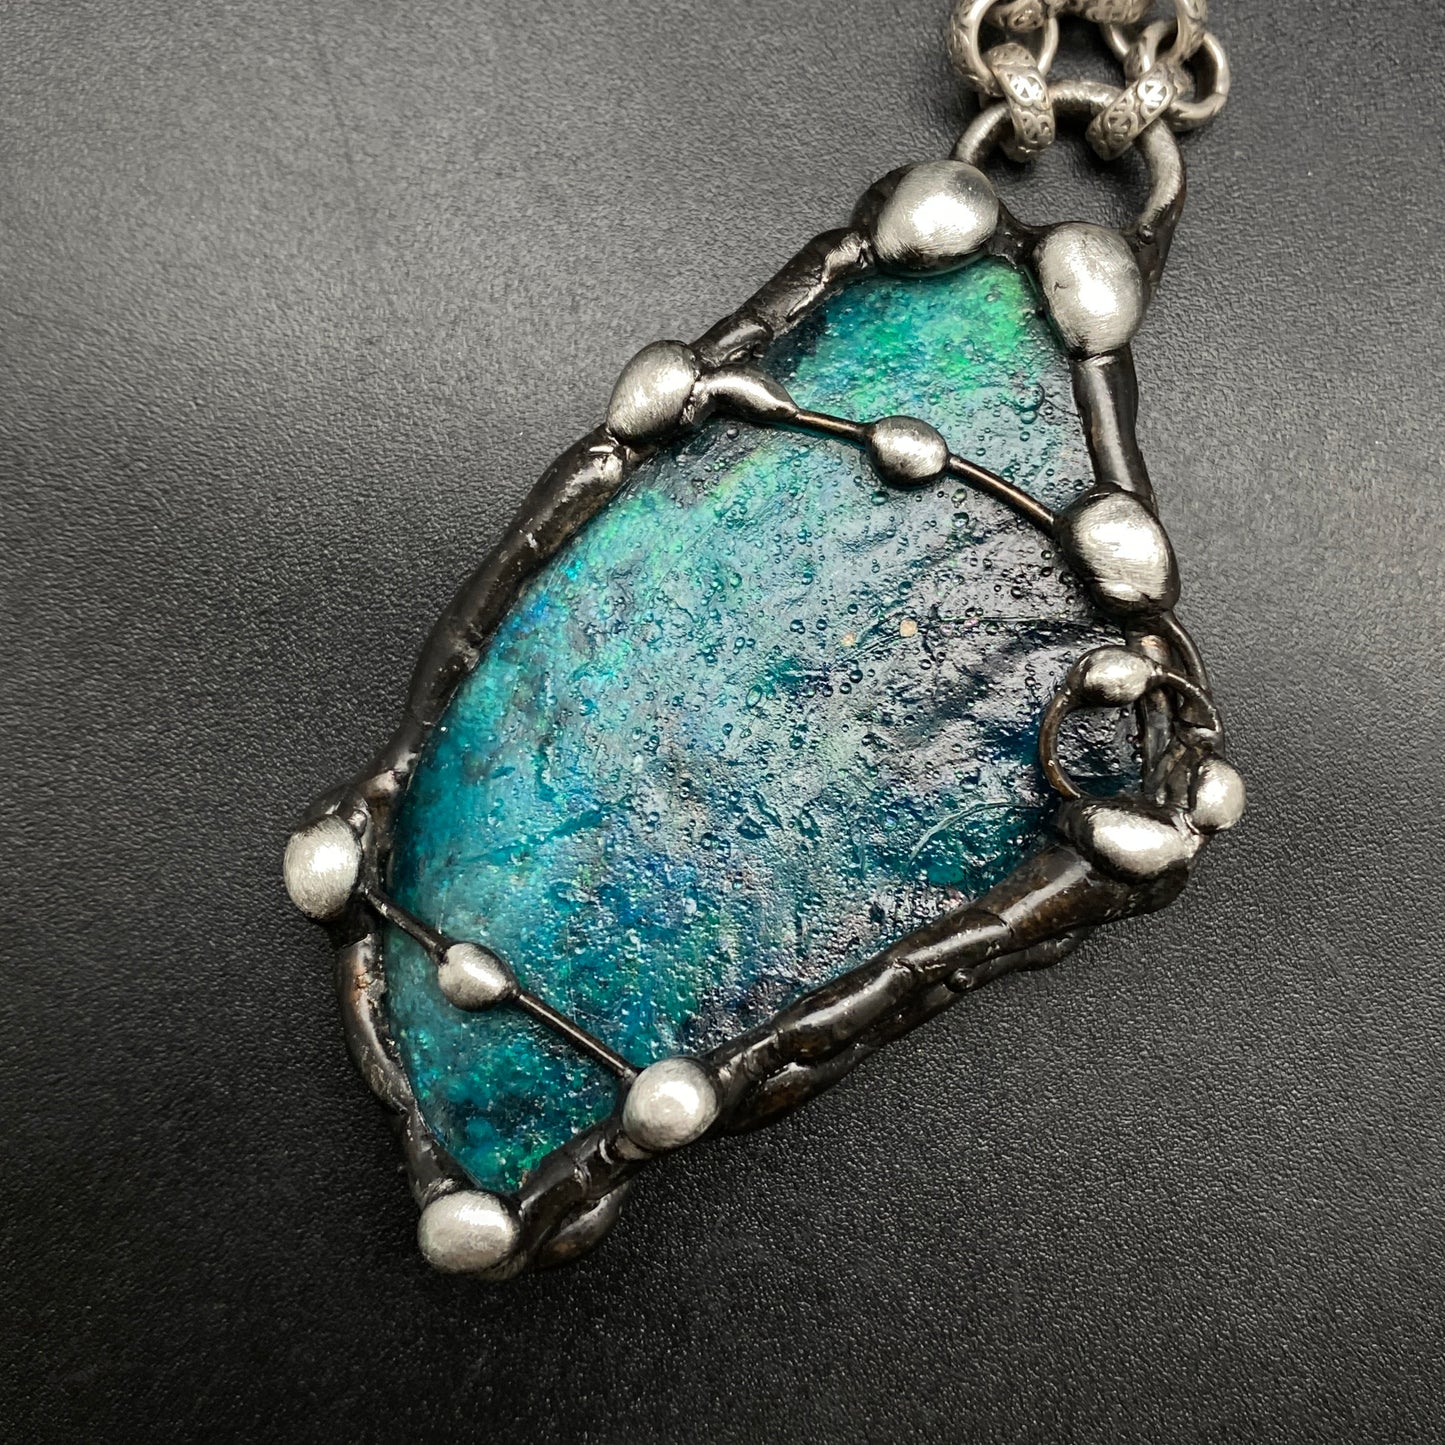 Frit ~ Ancient Roman Glass Necklace